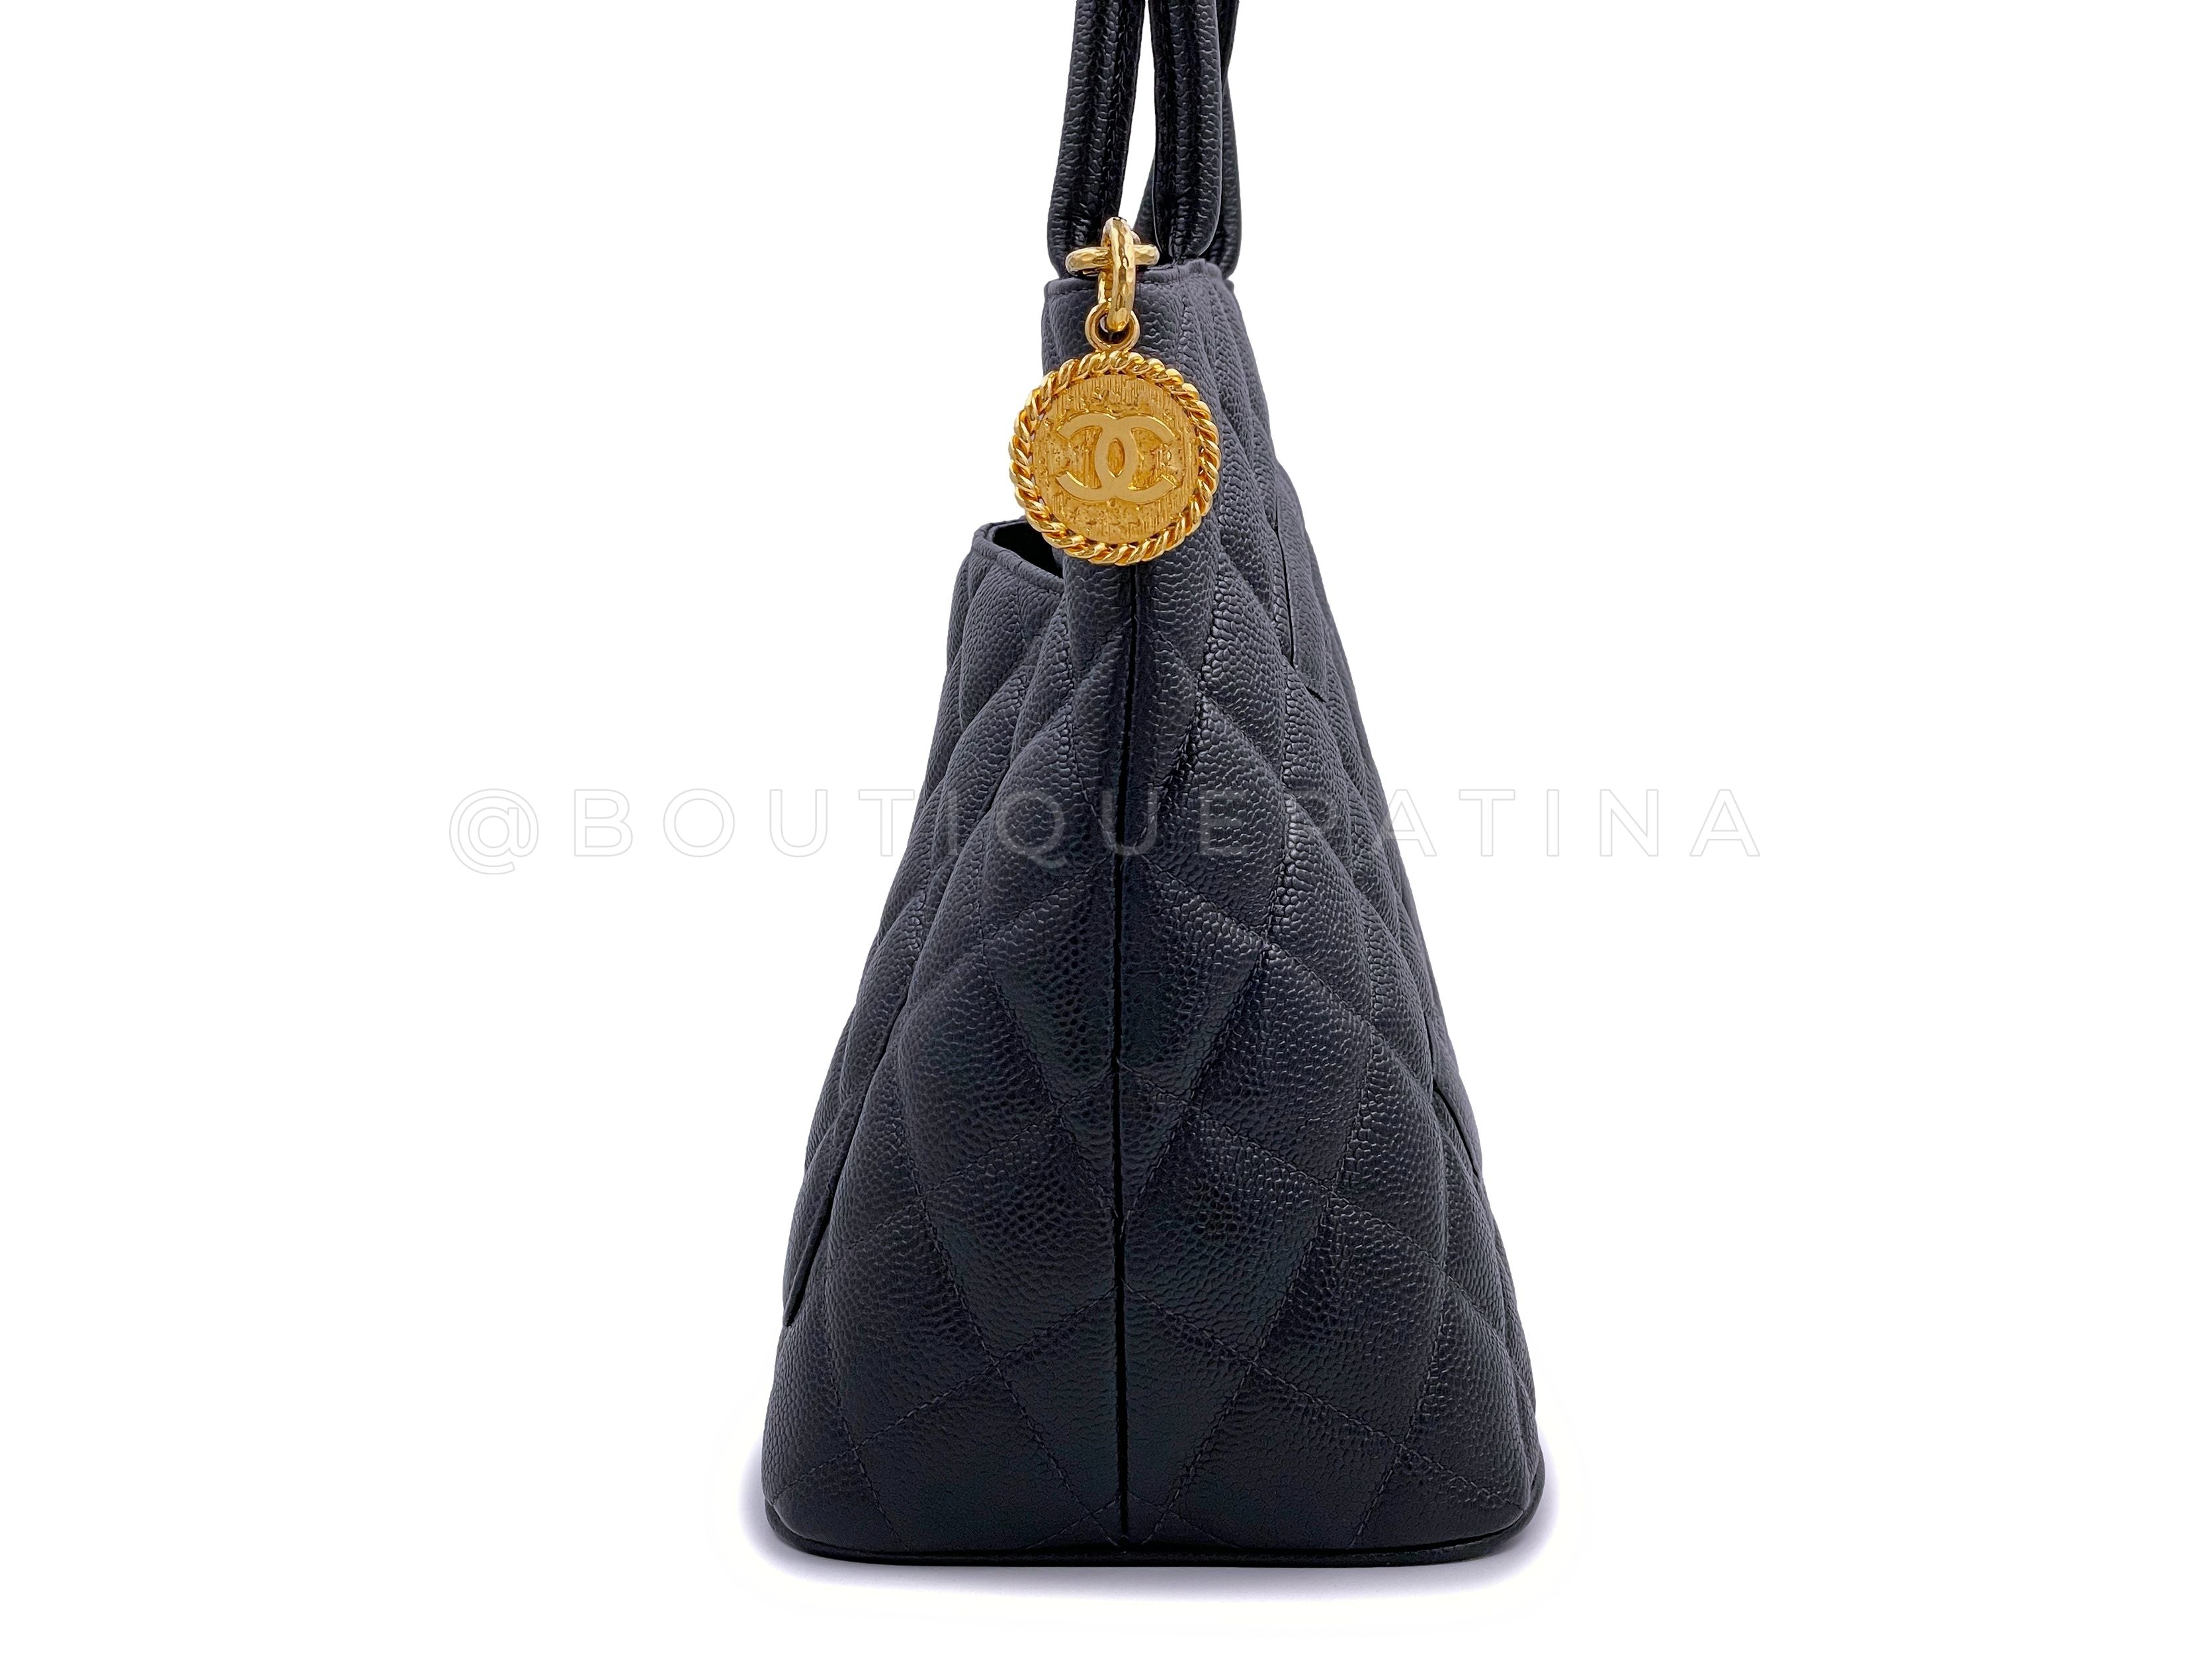 Pristine Chanel 1997 Vintage Black Caviar Medallion Tote Bag 24k GHW